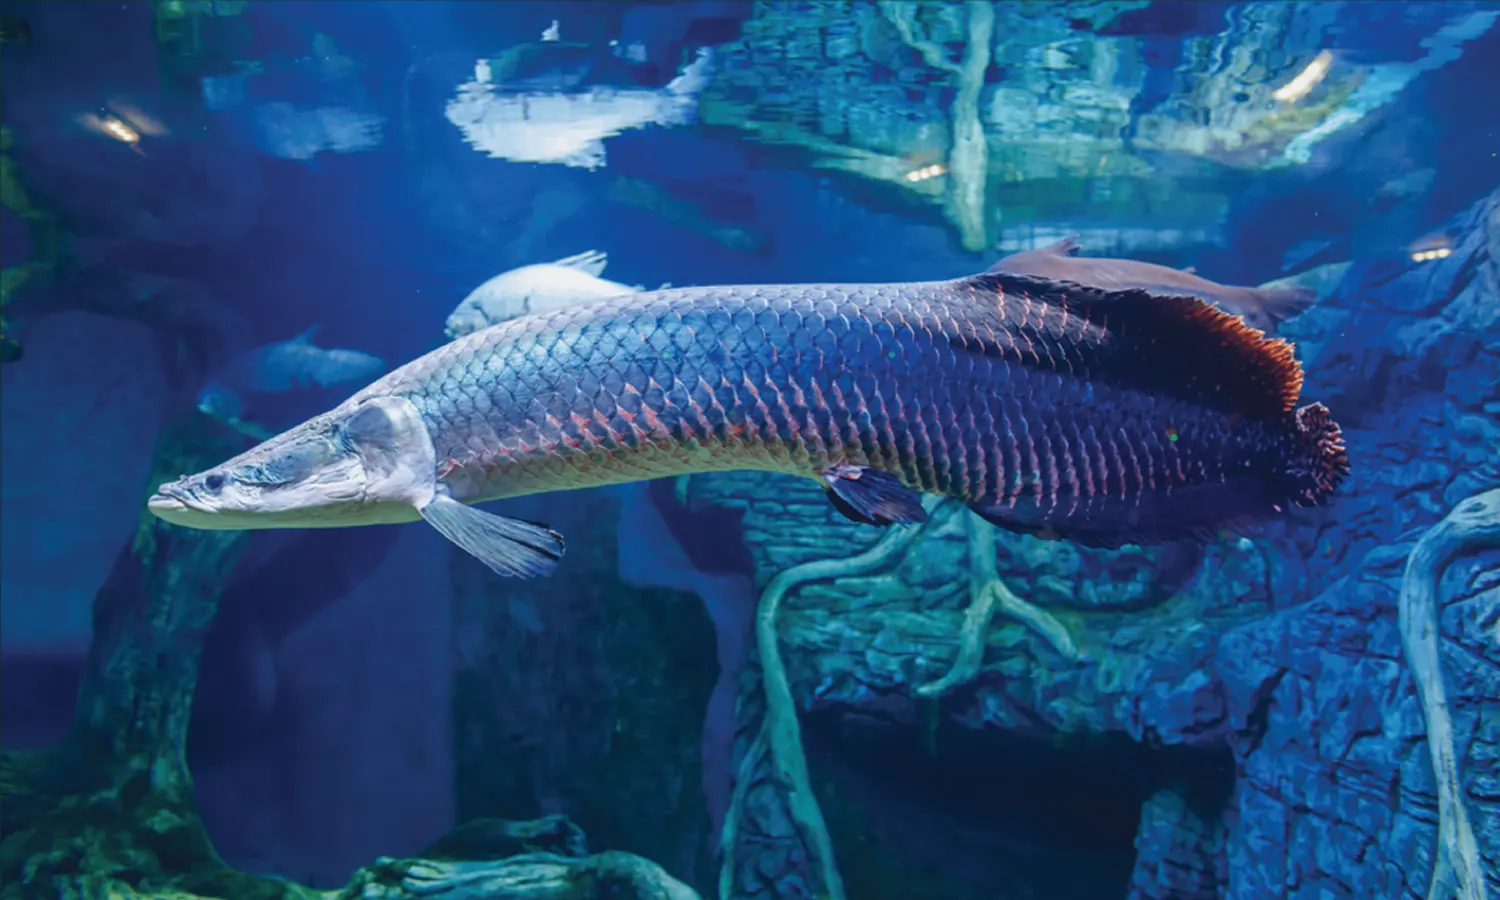 Mengulik Arapaima Gigas, Ikan Predator Berbahaya dengan Berat Mencapai 200 Kg